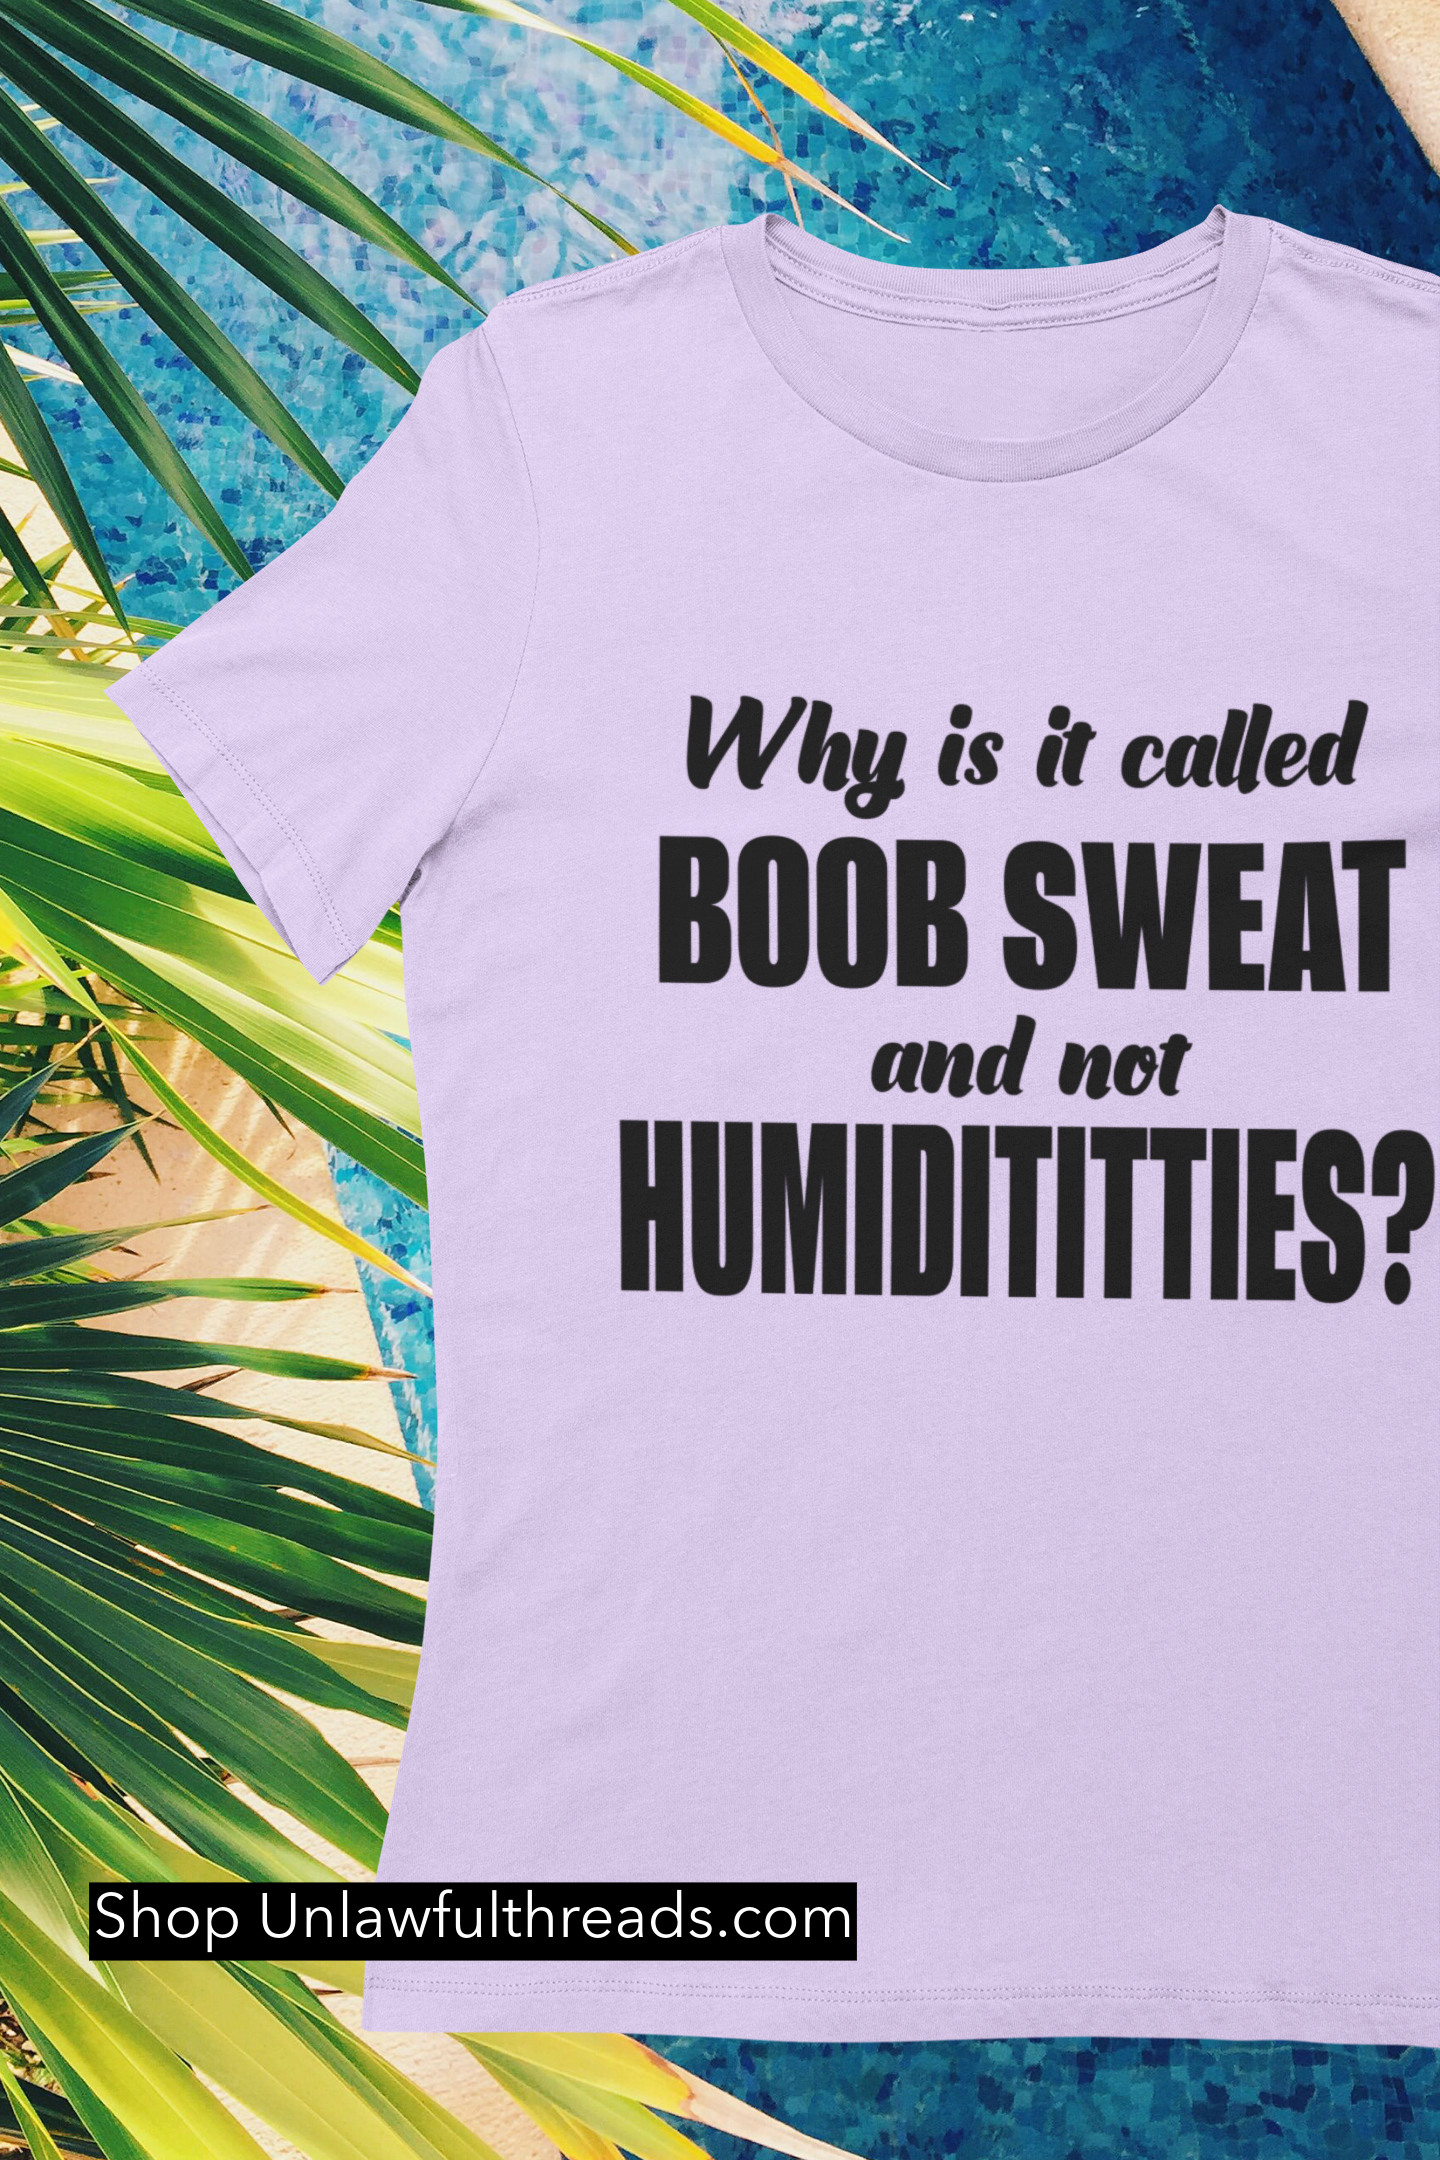 Underboob sweat : r/HumidiTitties